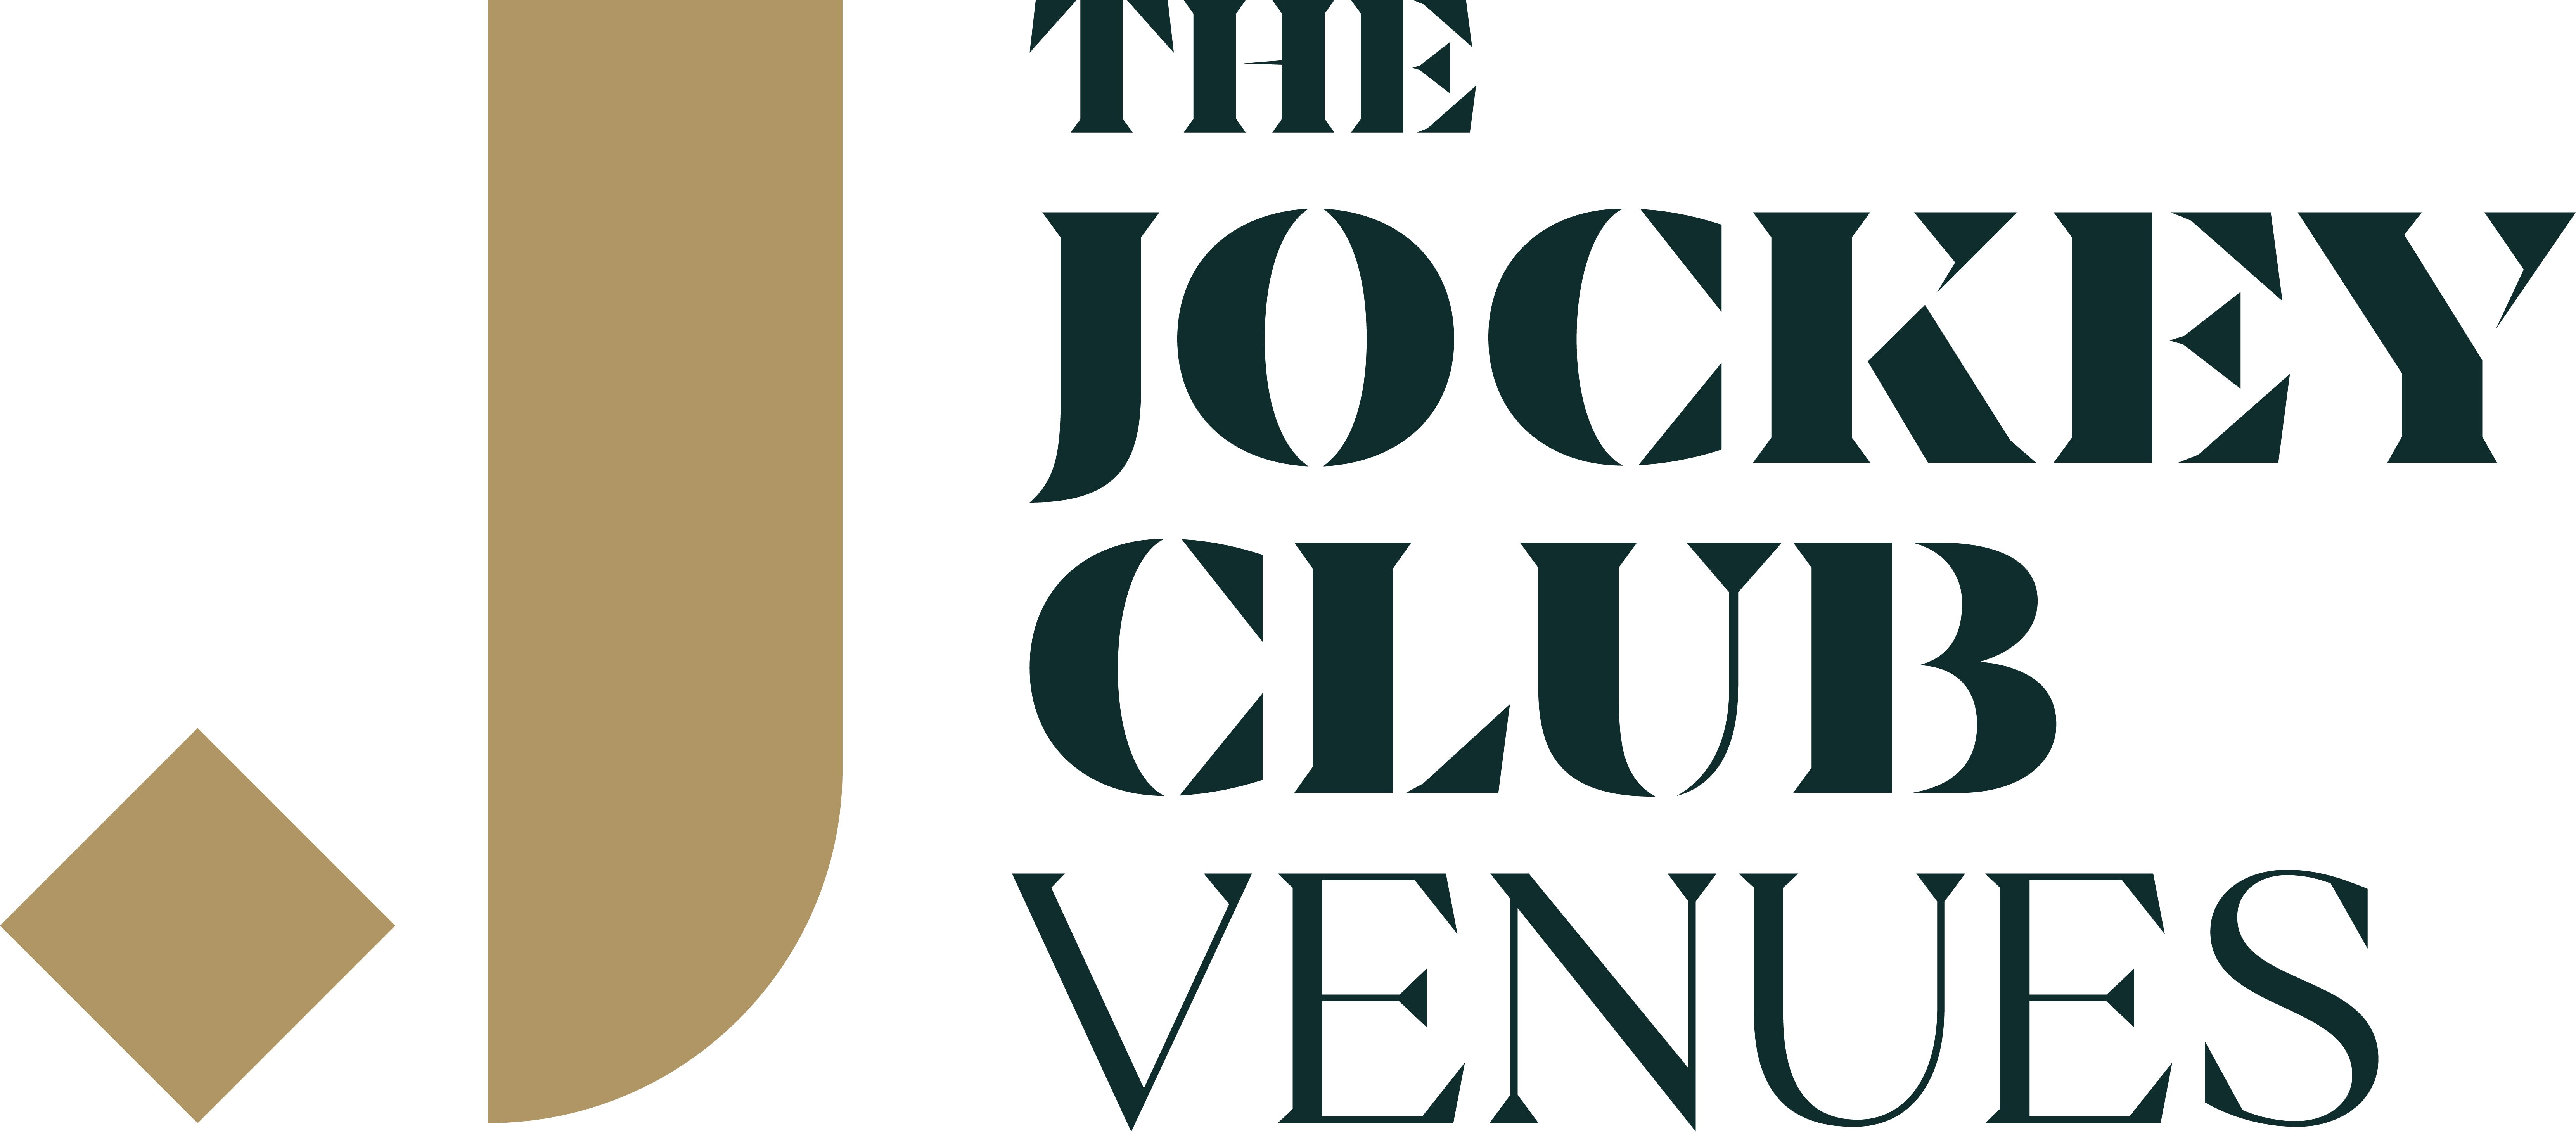 jockey club logo